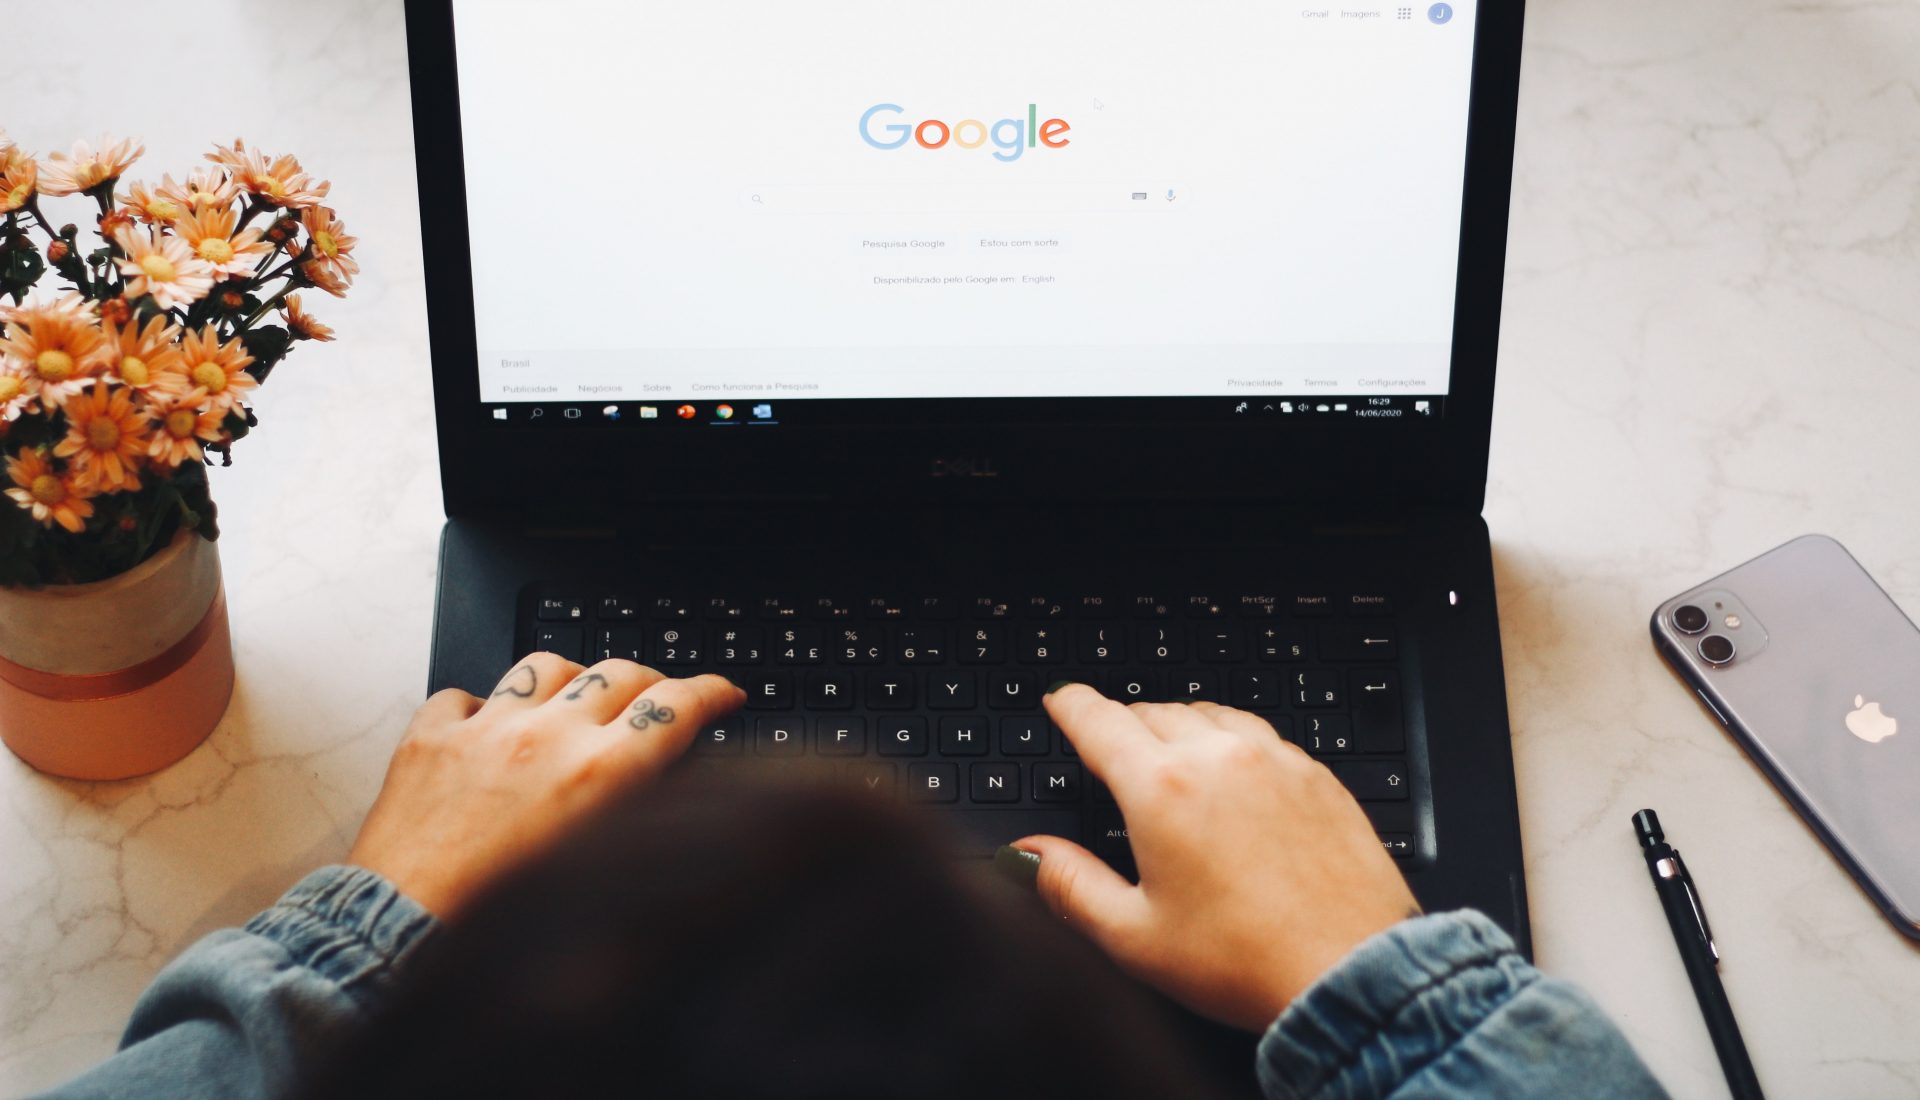 Google search engine on laptop